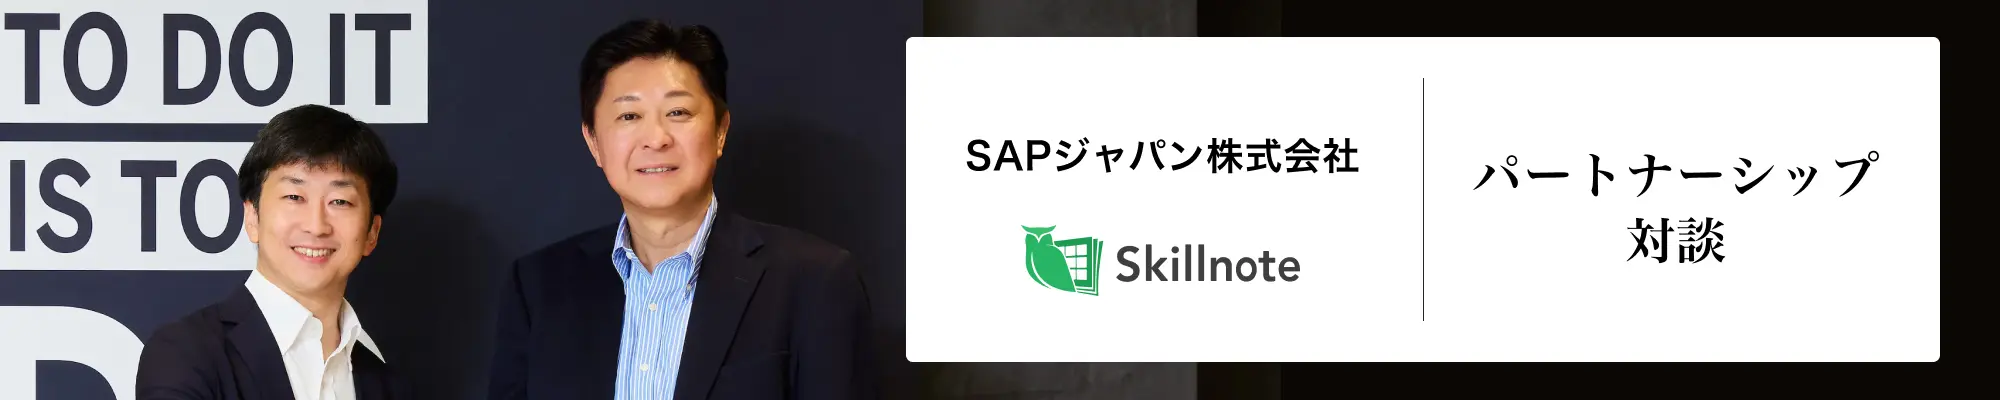 SAPジャパン株式会社、スキルノート パートナーシップ対談